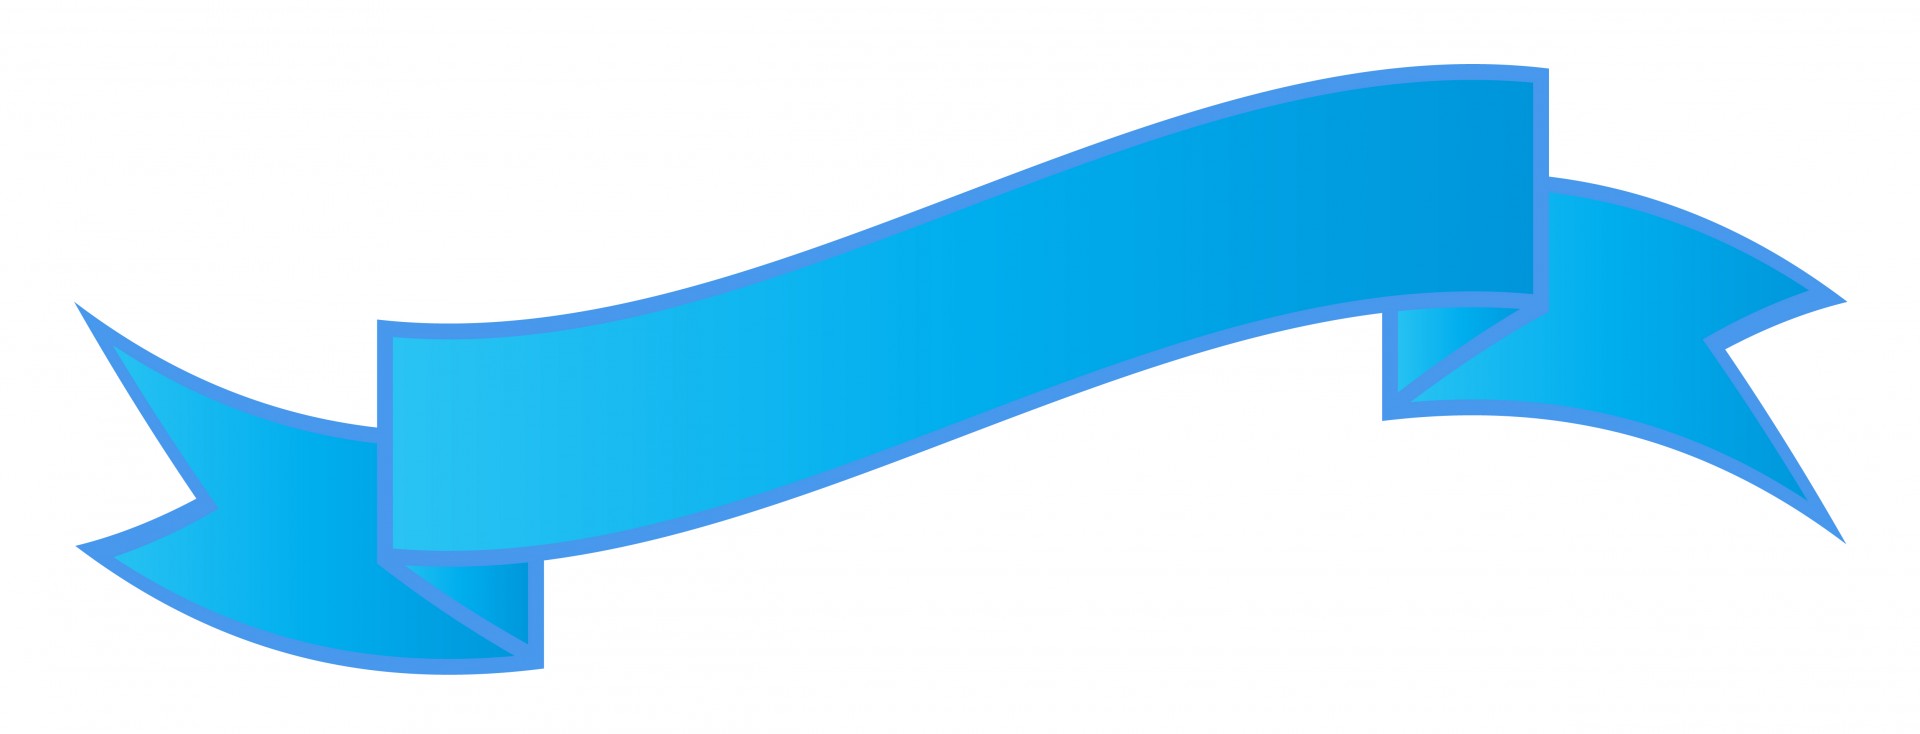 Blue Ribbon Banners Vector Art & Graphics